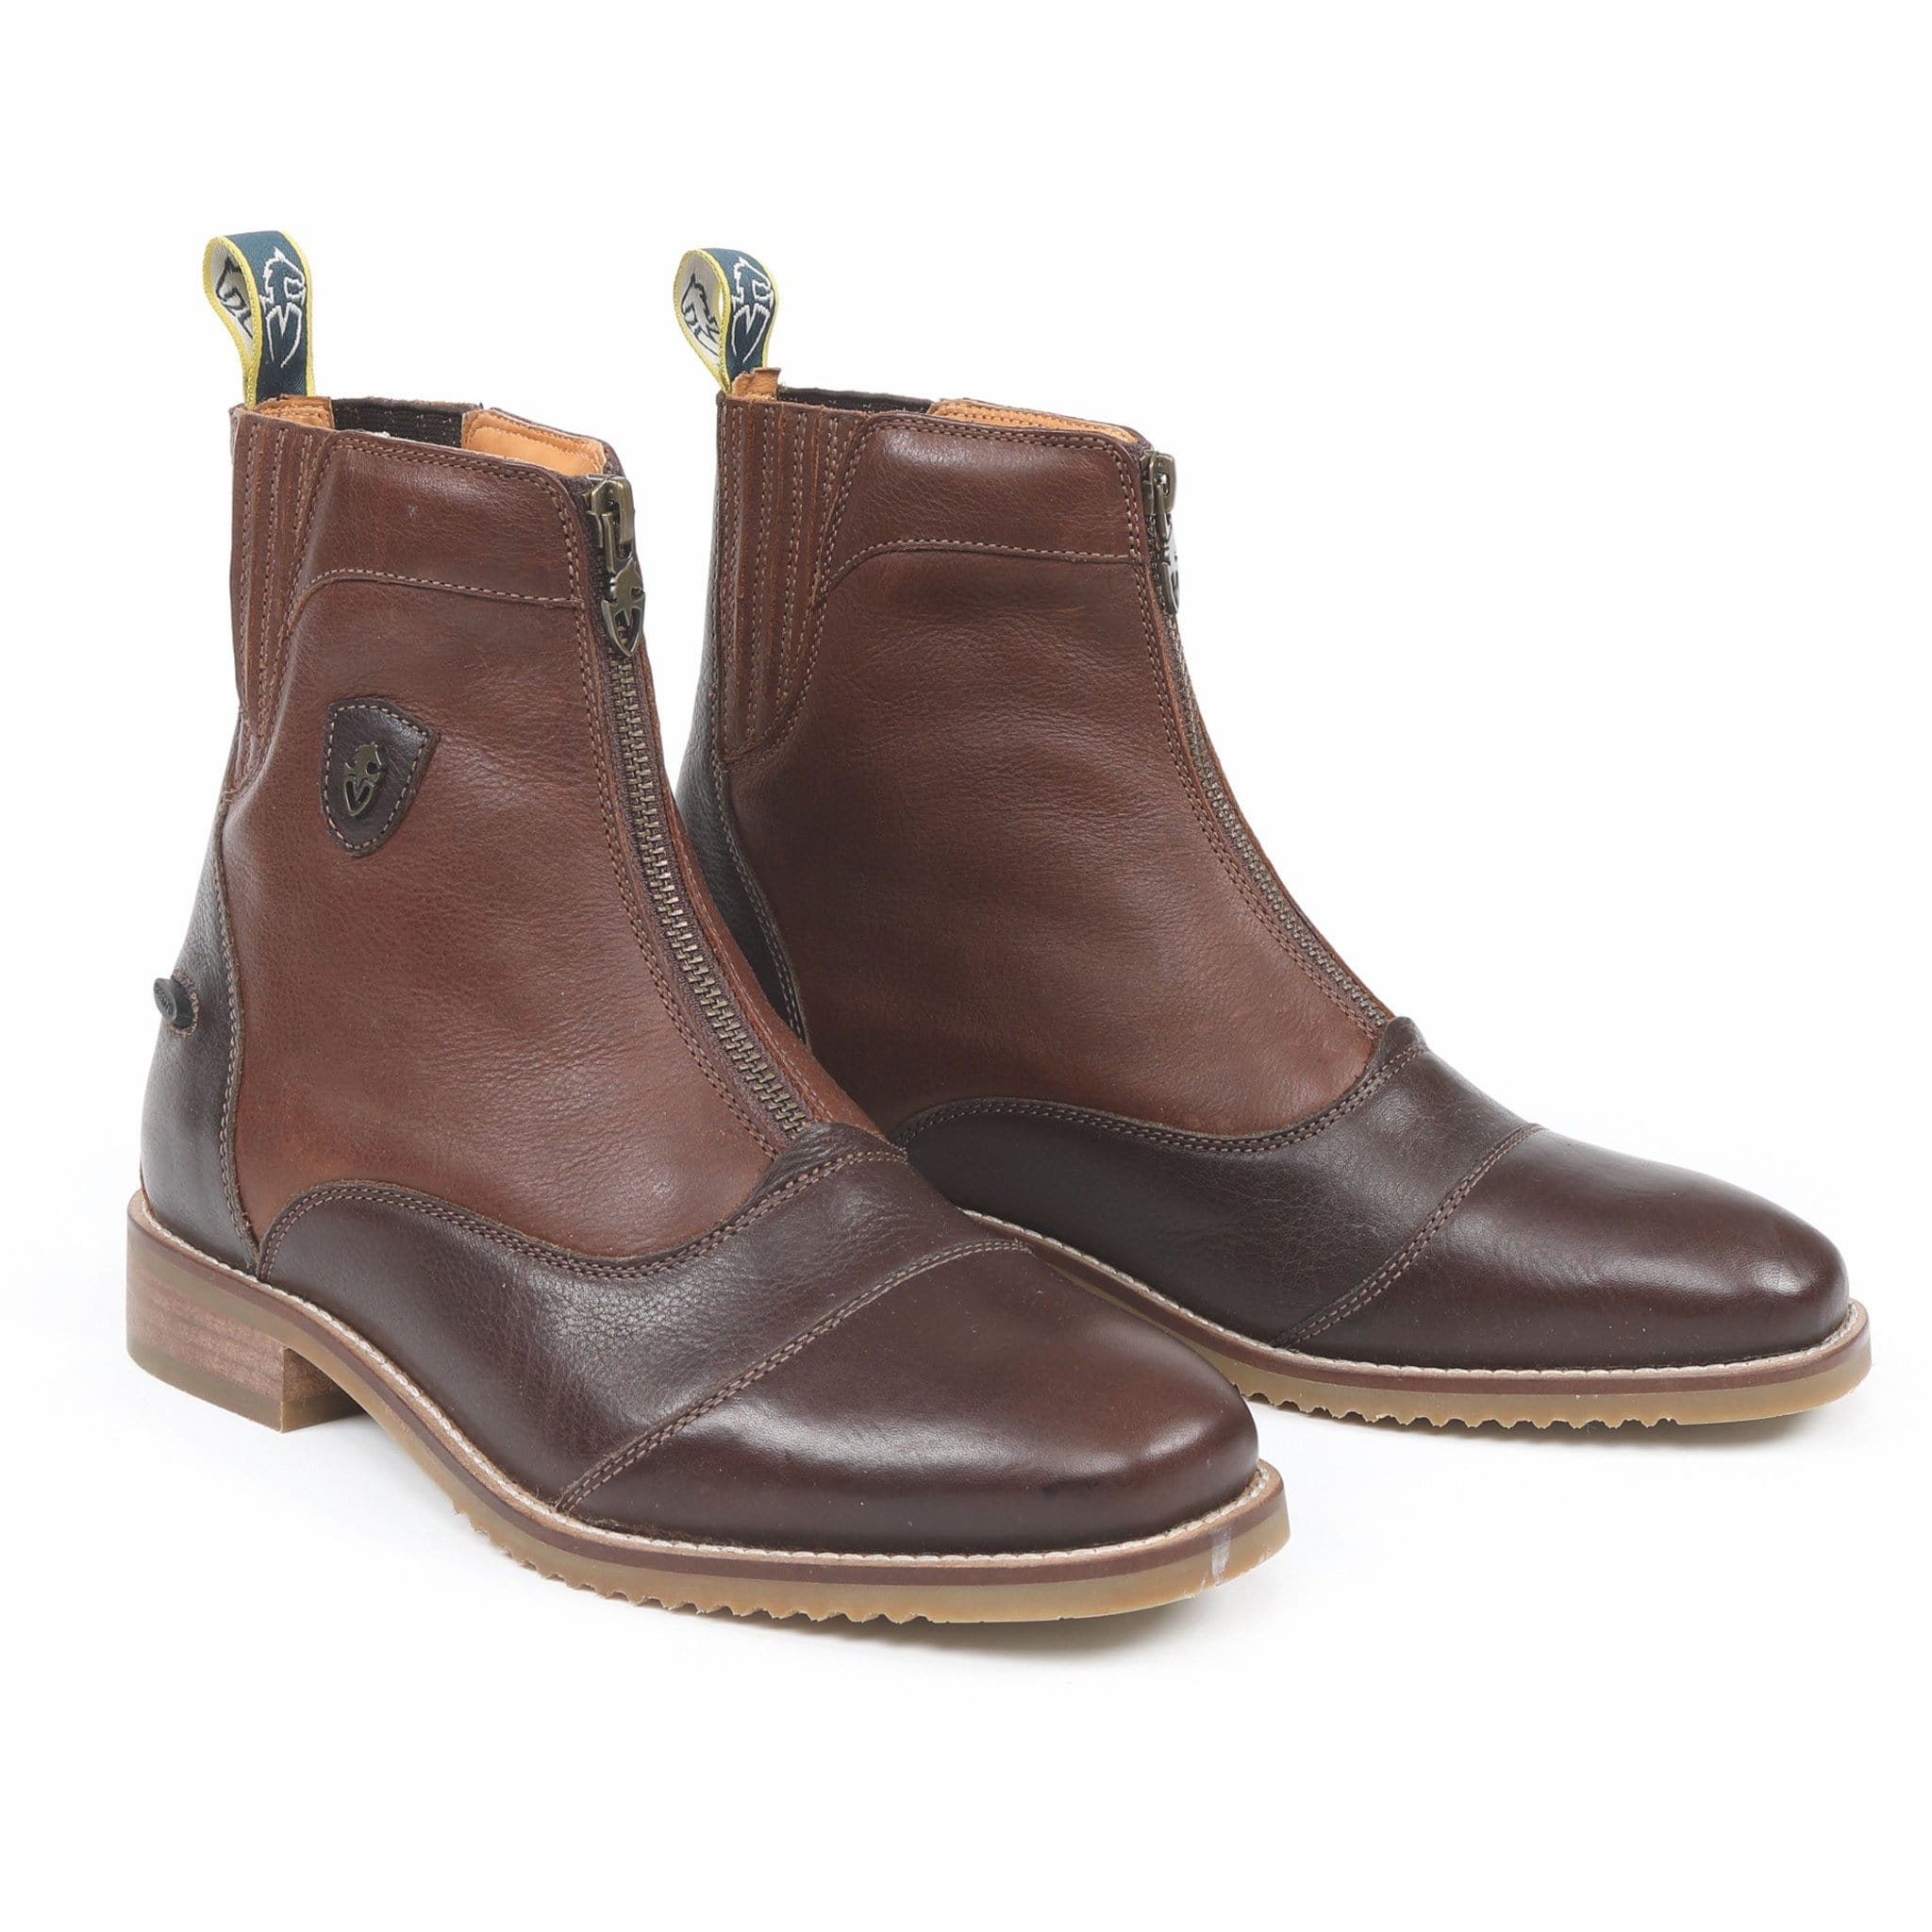 Moretta Viviana Zip Paddock Boots 8229 Chestnut Brown Pair